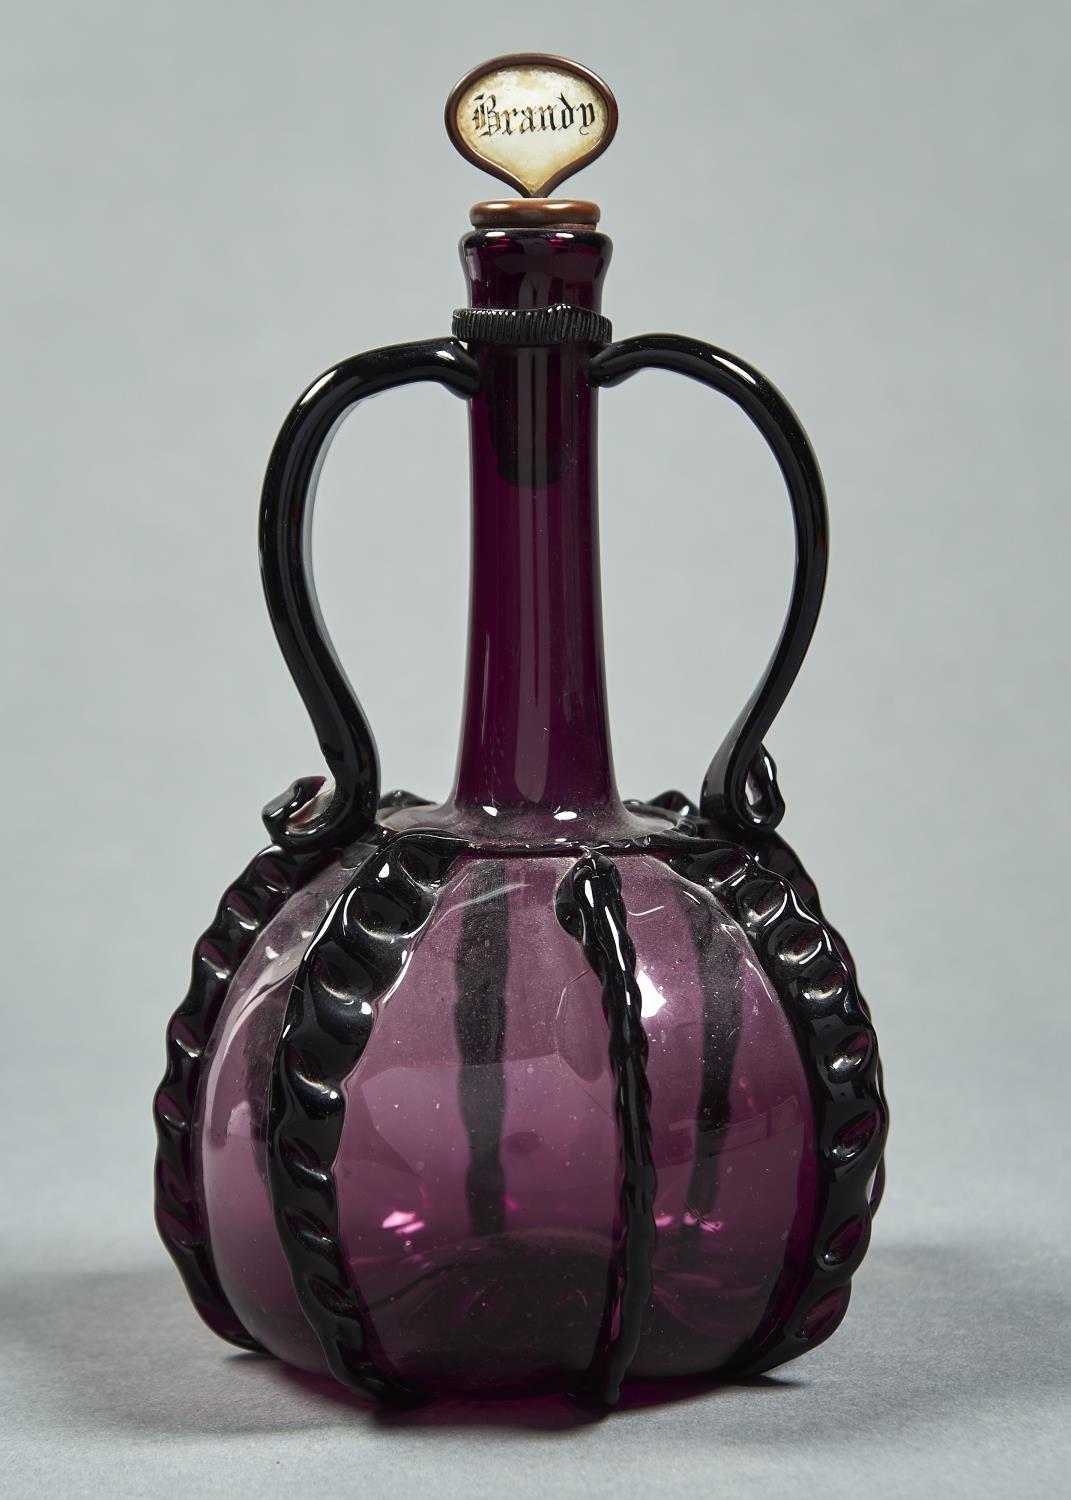 A VENETIAN REVIVAL AMETHYST GLASS SHAFT-AND-GLOBE SPIRIT BOTTLE, ZIRATFLASKE, LATE 18TH C, WITH